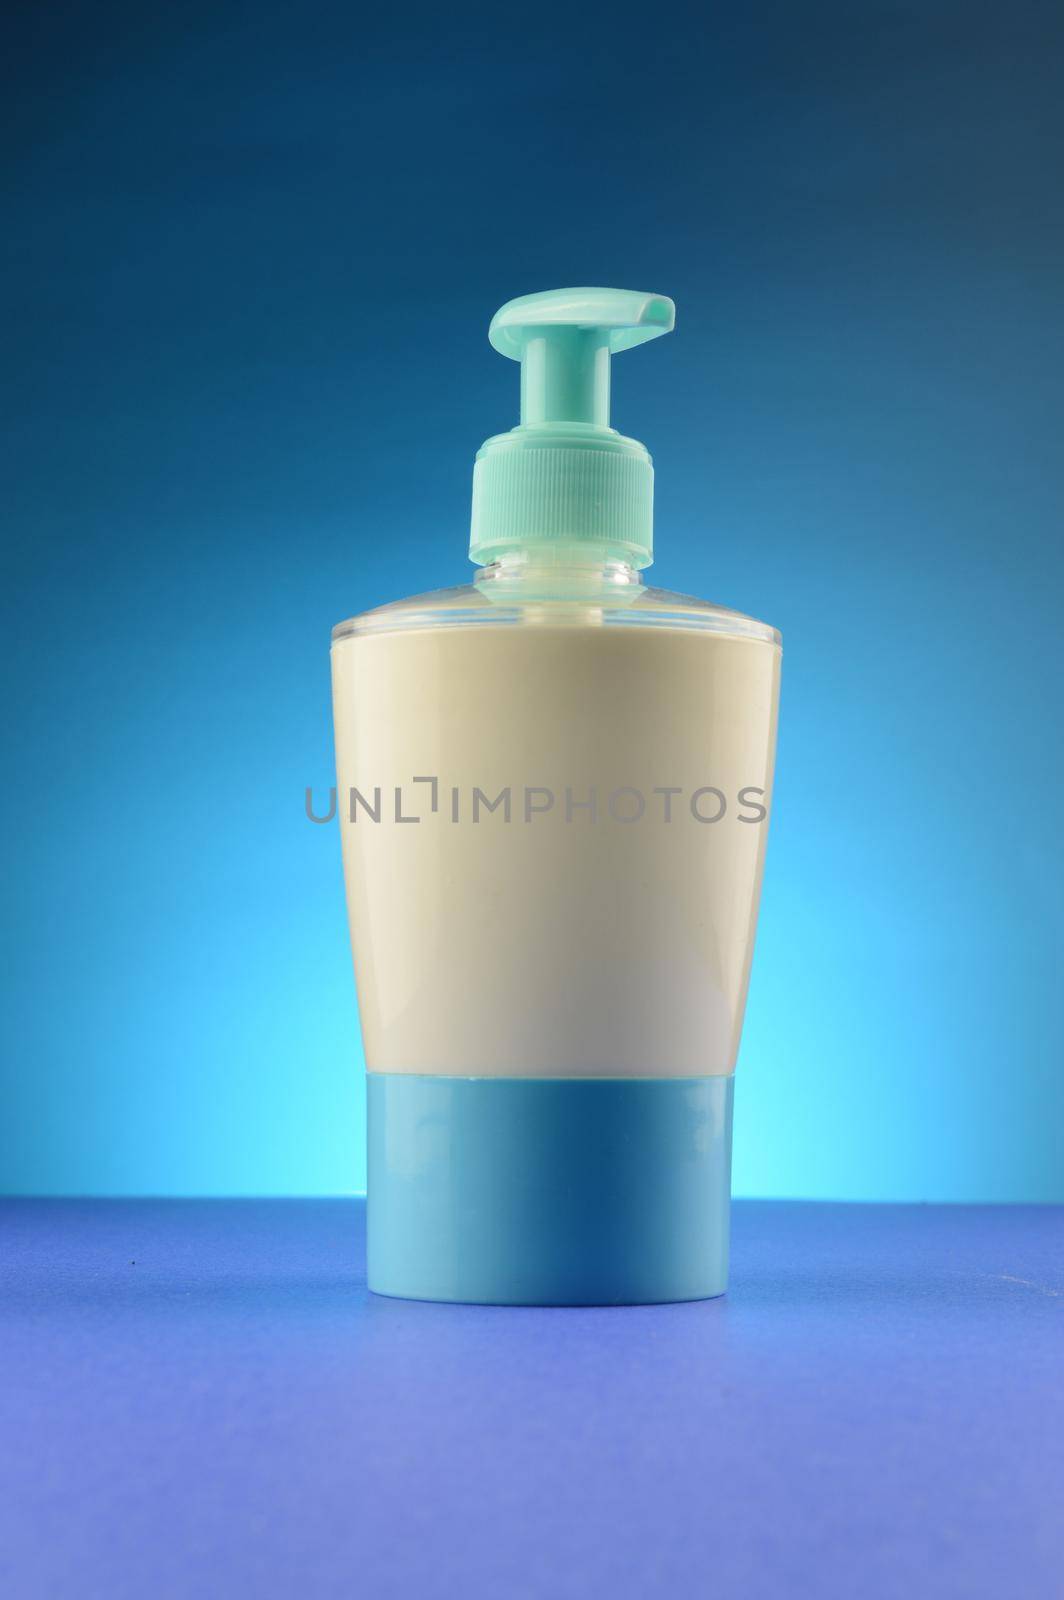 A liquid soap dispenser over a clean blue background.